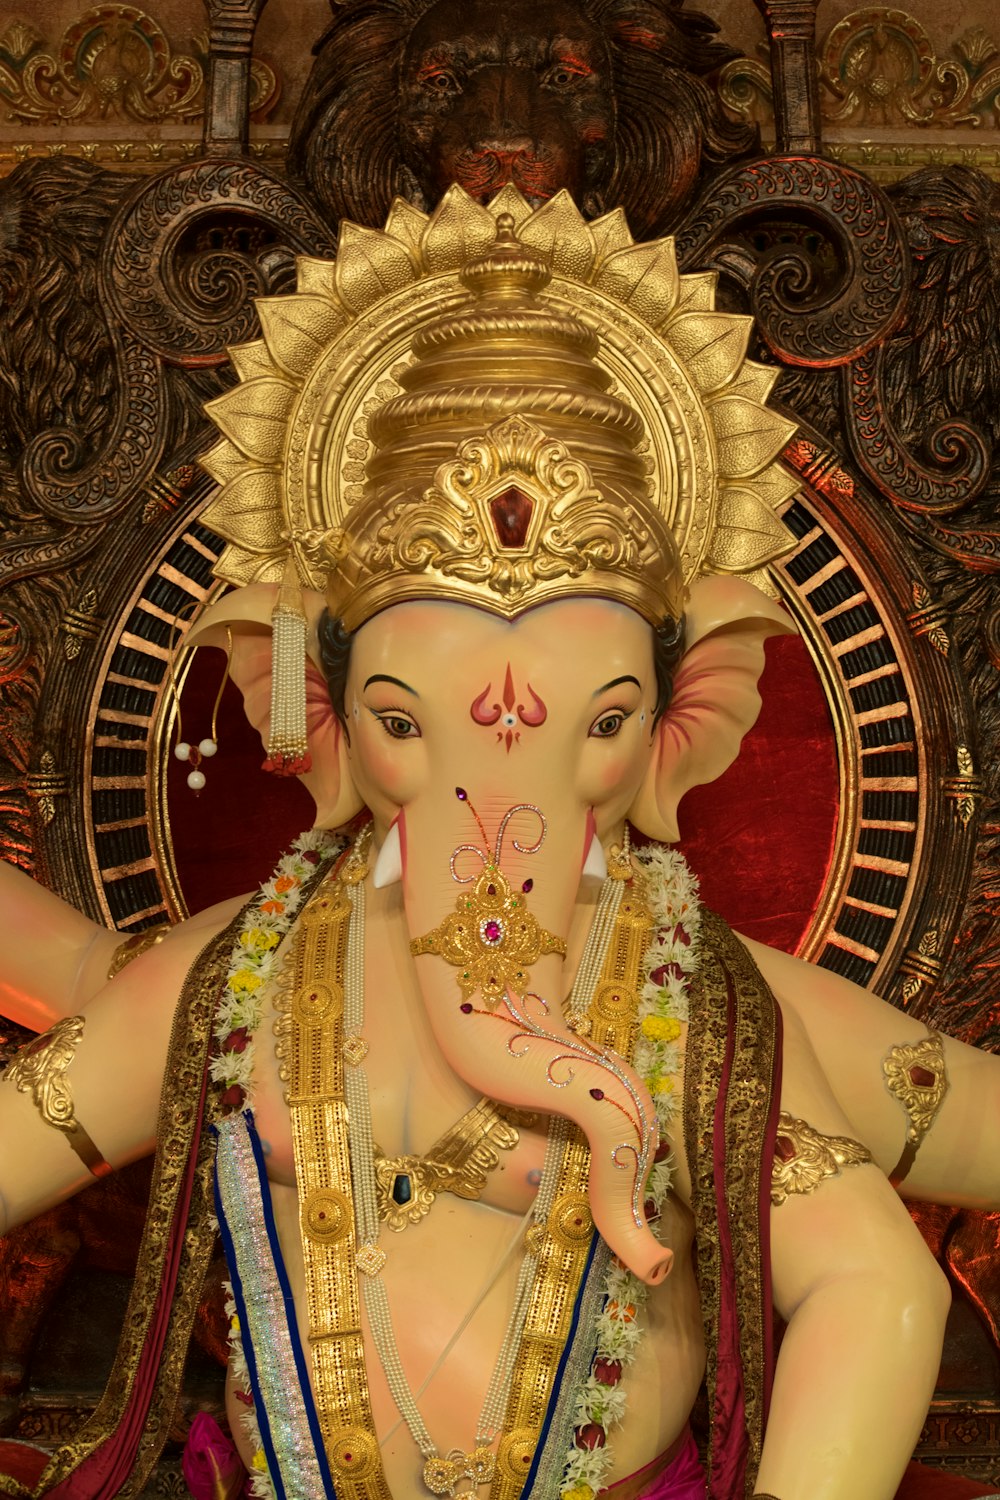 estatueta da divindade hindu dourada e vermelha